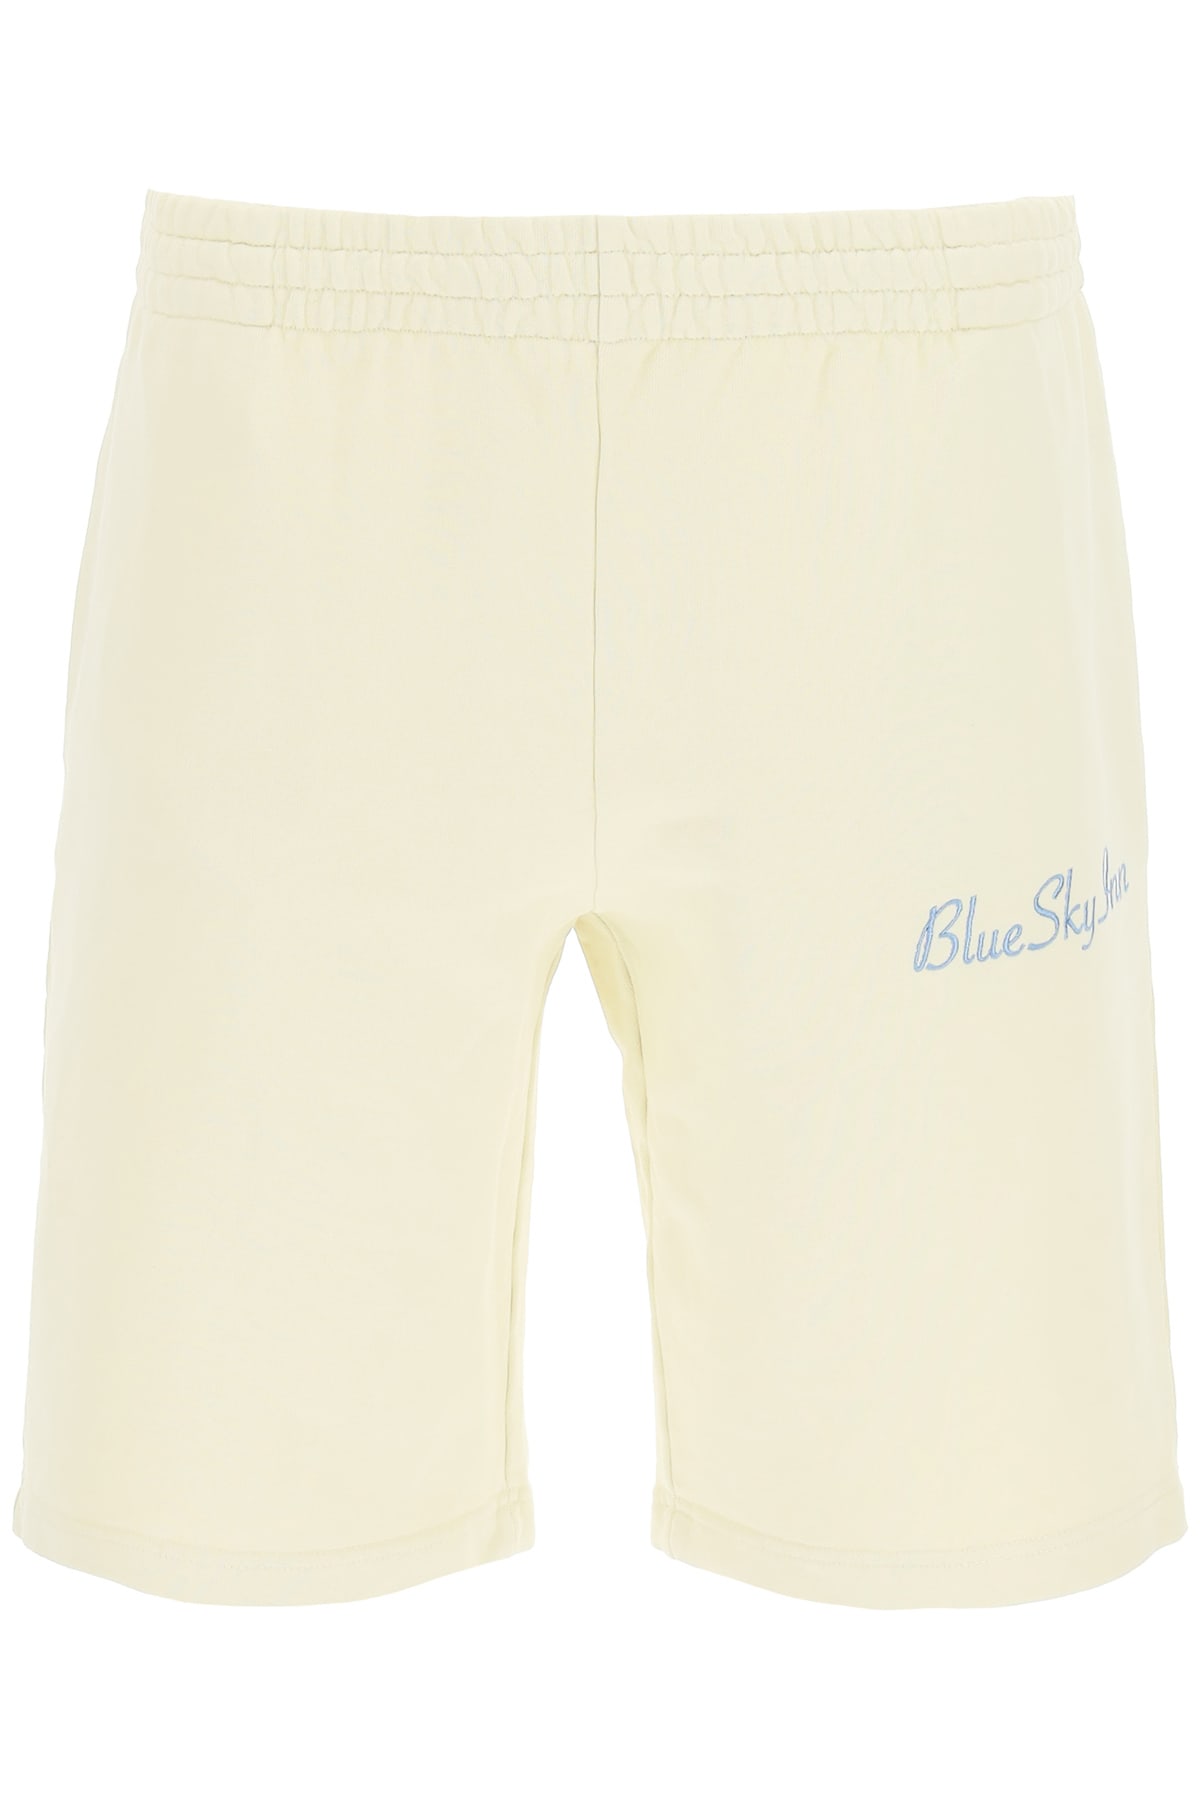 Blue Sky Inn Logo Shorts